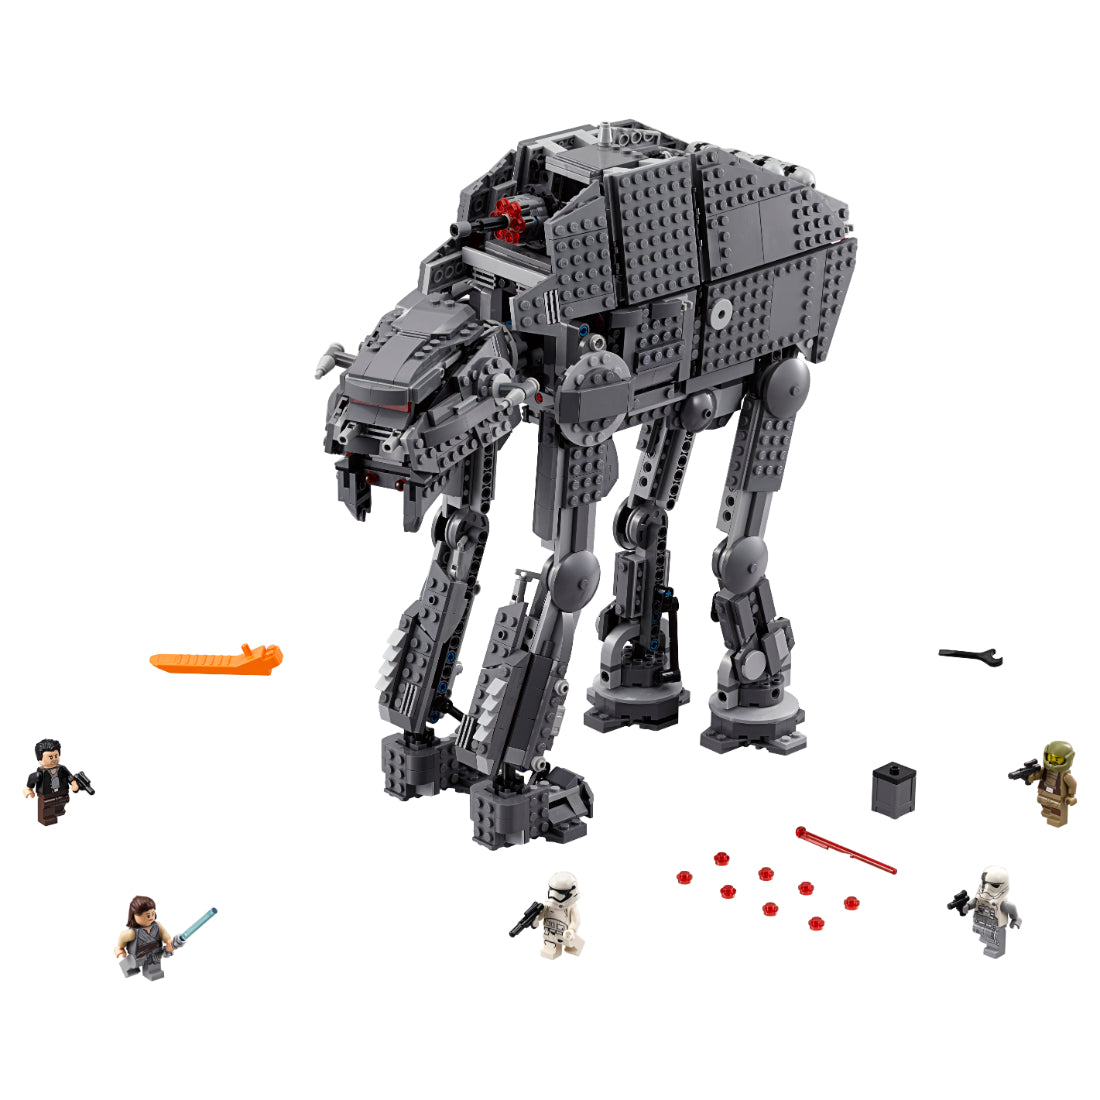 LEGO® Star Wars™ First Order Heavy Assault Walker™ (75189)